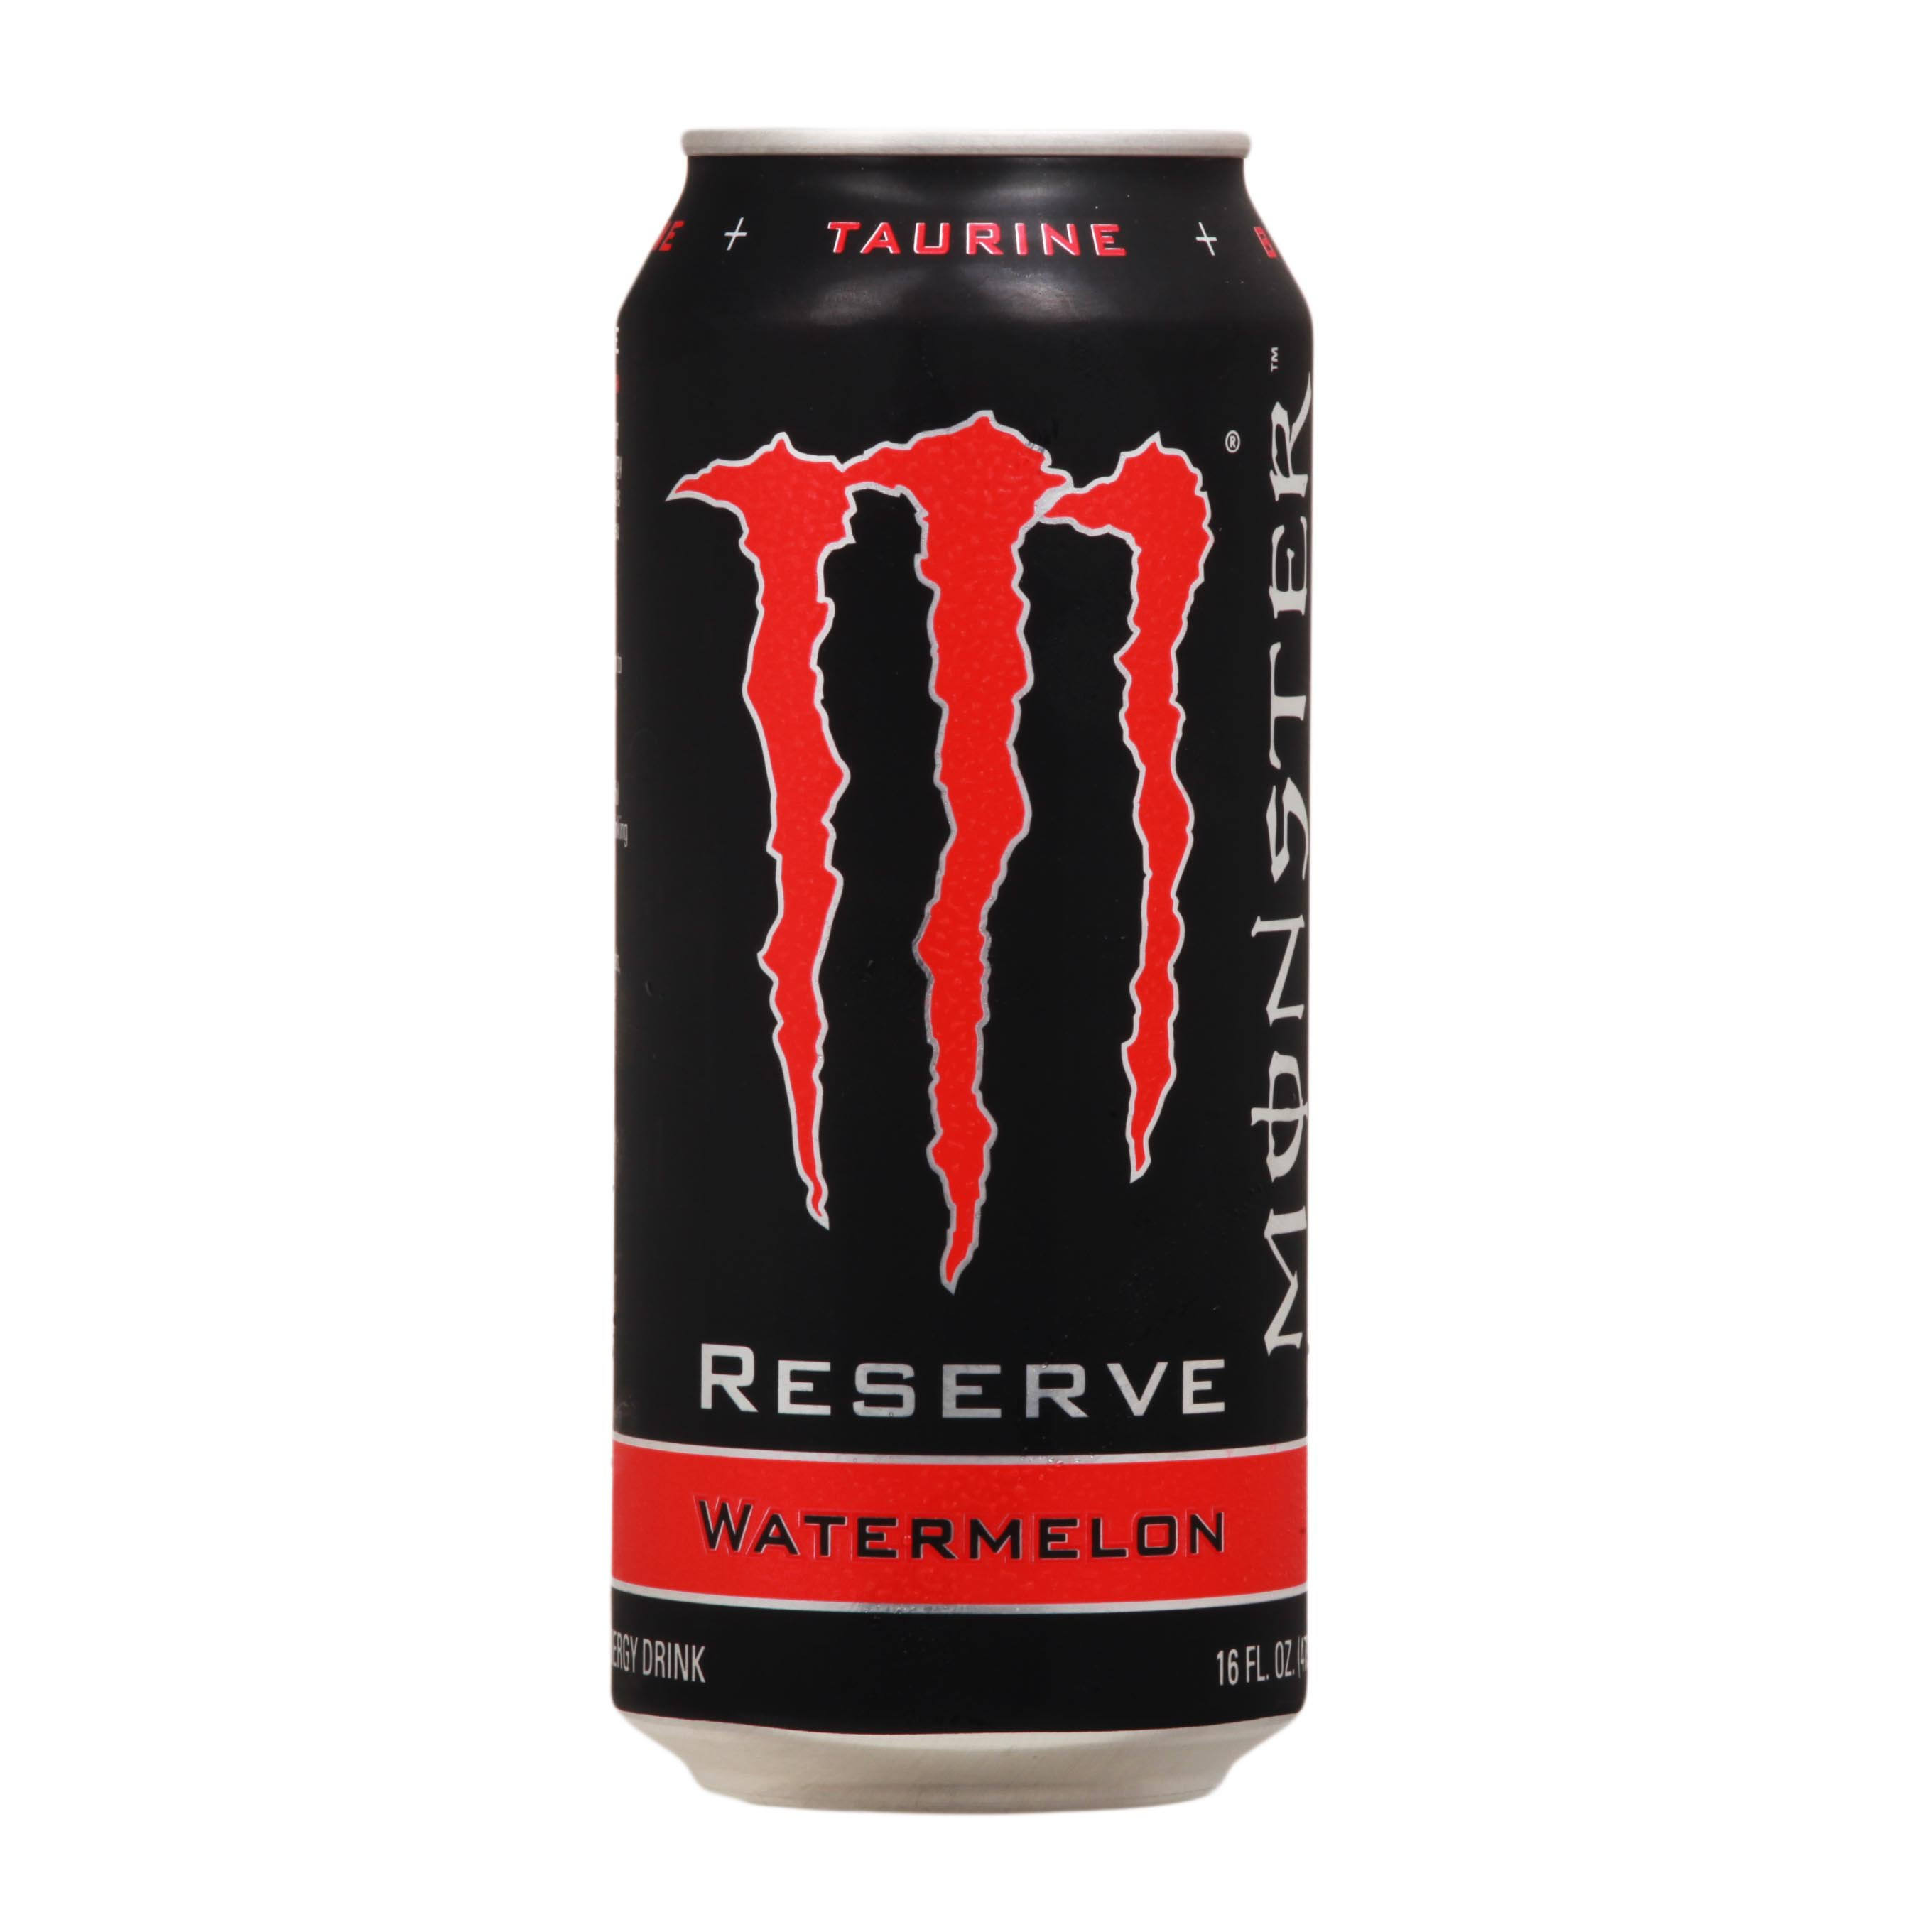 Monster Reserve Energy Drink, Watermelon - 16 fl oz